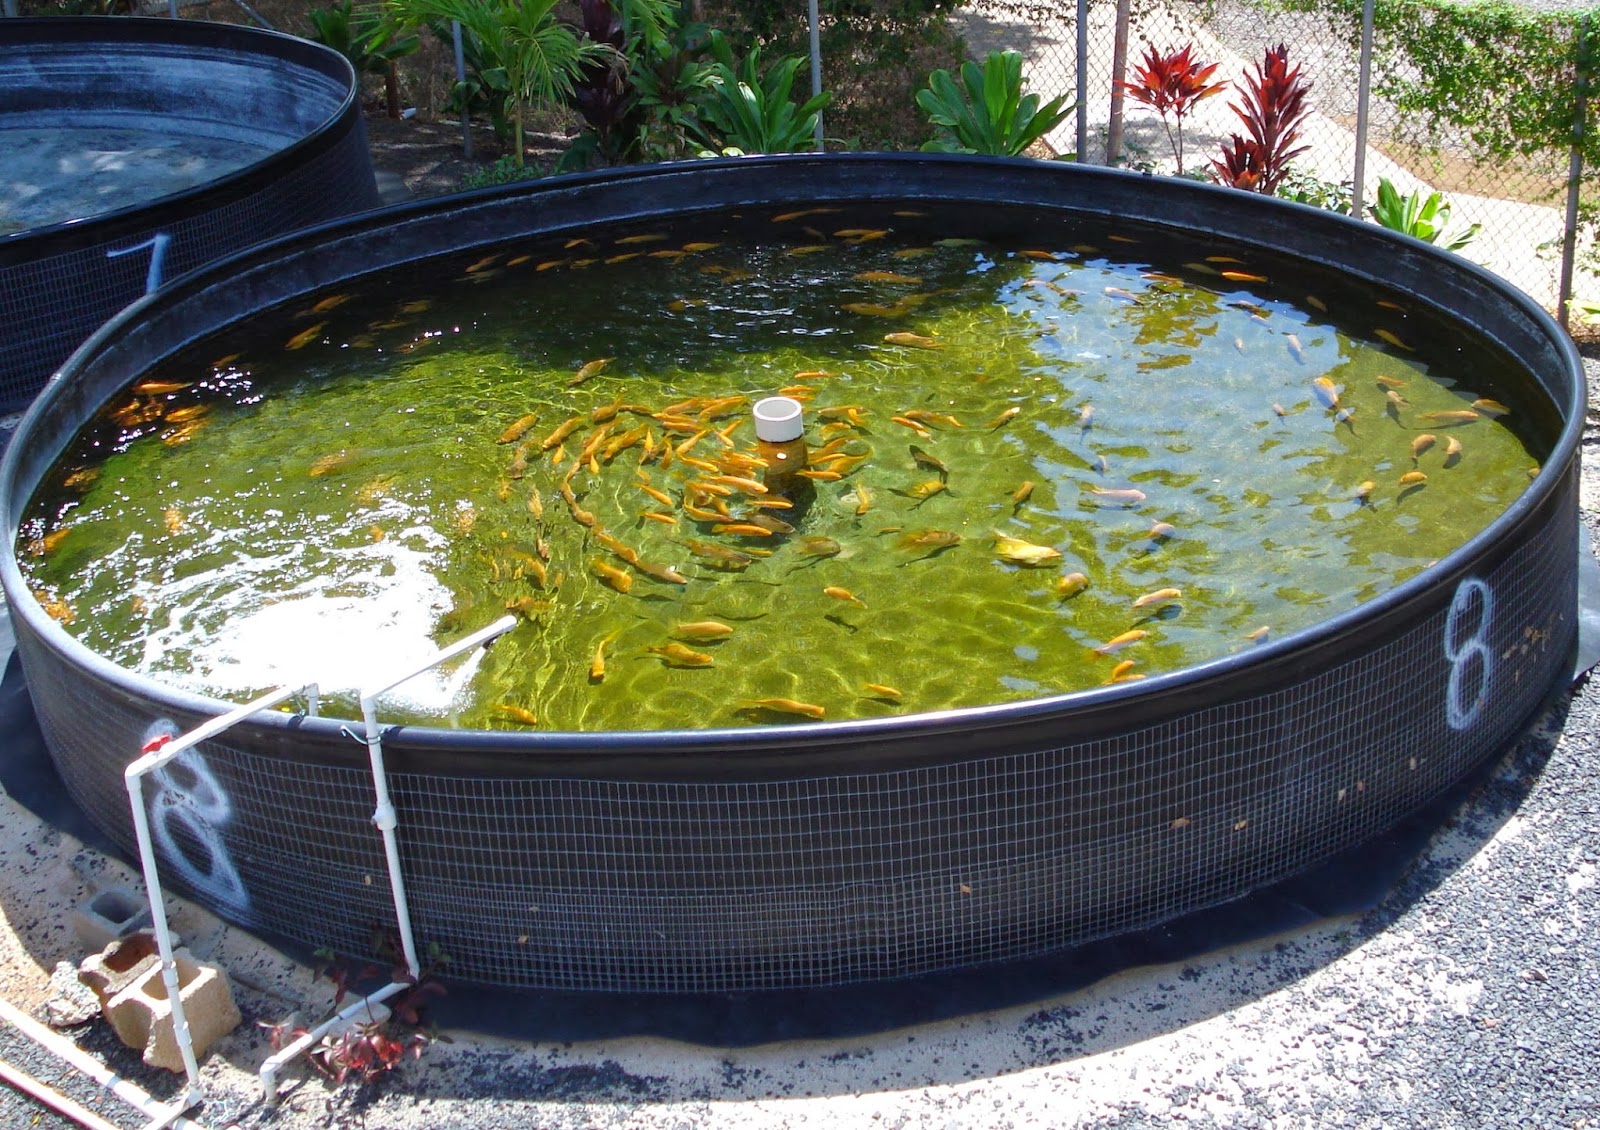  Garden Tips: Aquaponics Fish for getting a Perfect Aquaponics System